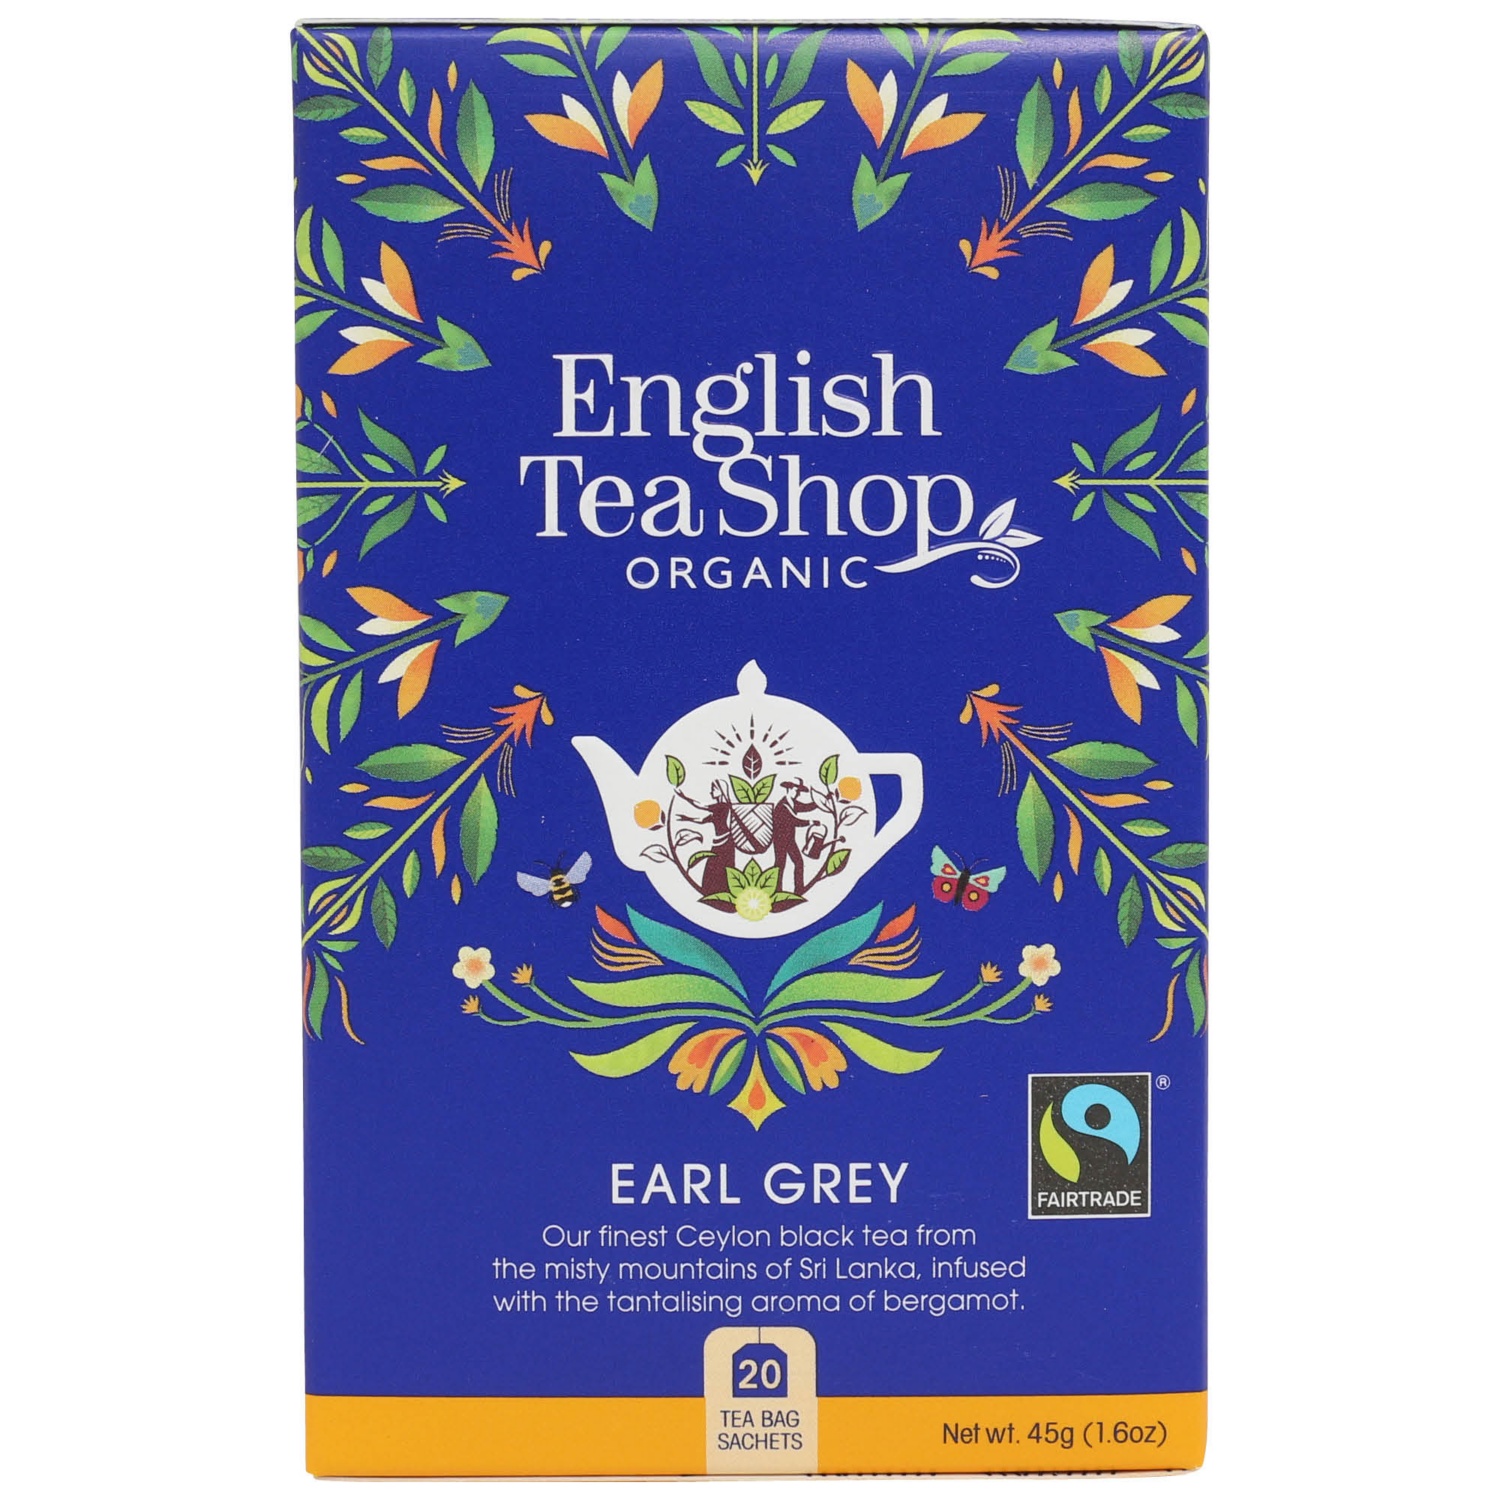 English Tea Shop BIO, Earl Grey